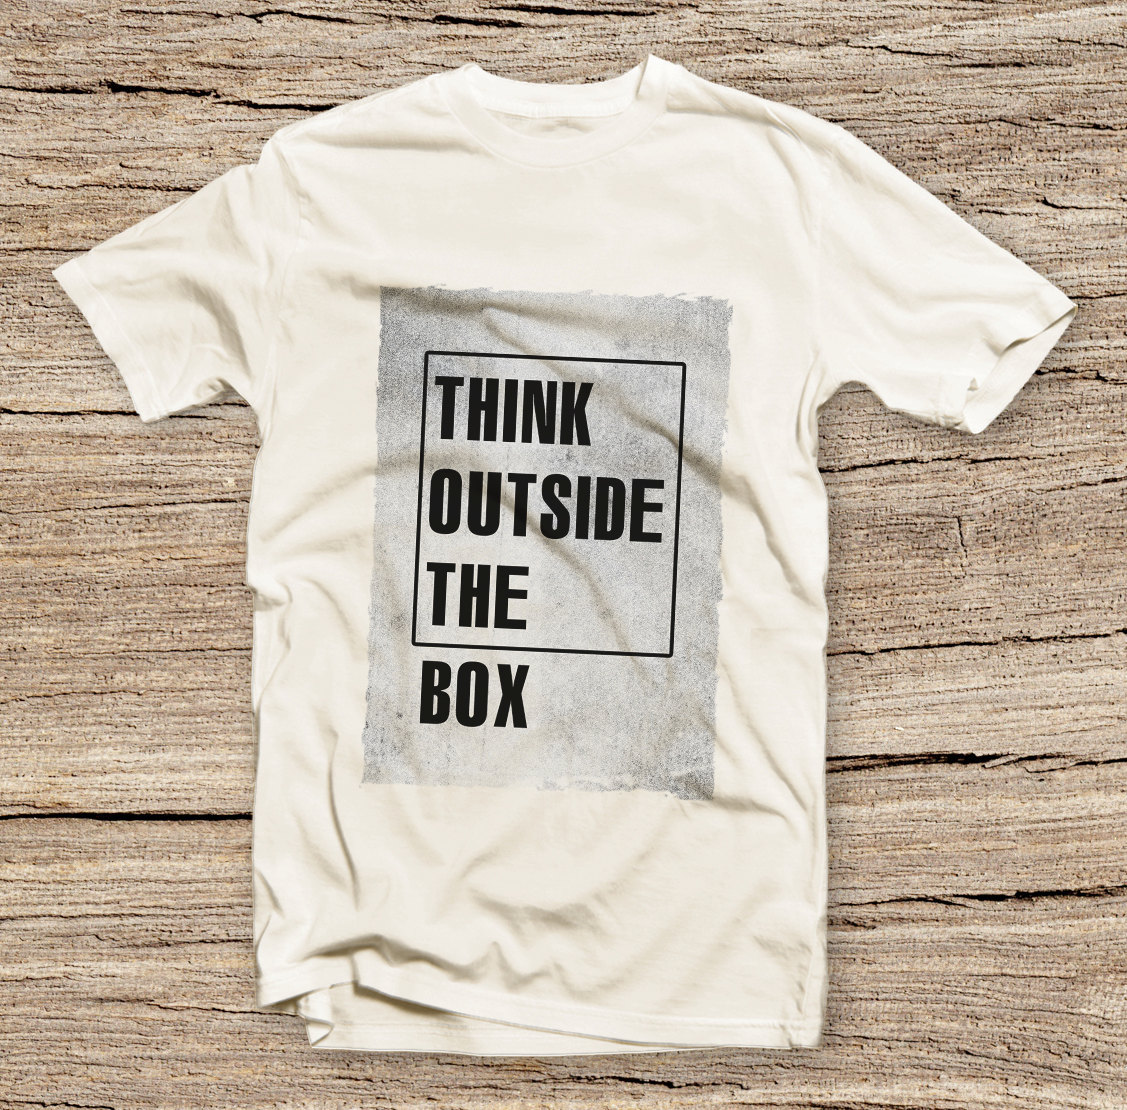 Pts-039 Think Outside The Box T-shirt, Fashion Style Printed T-shirt